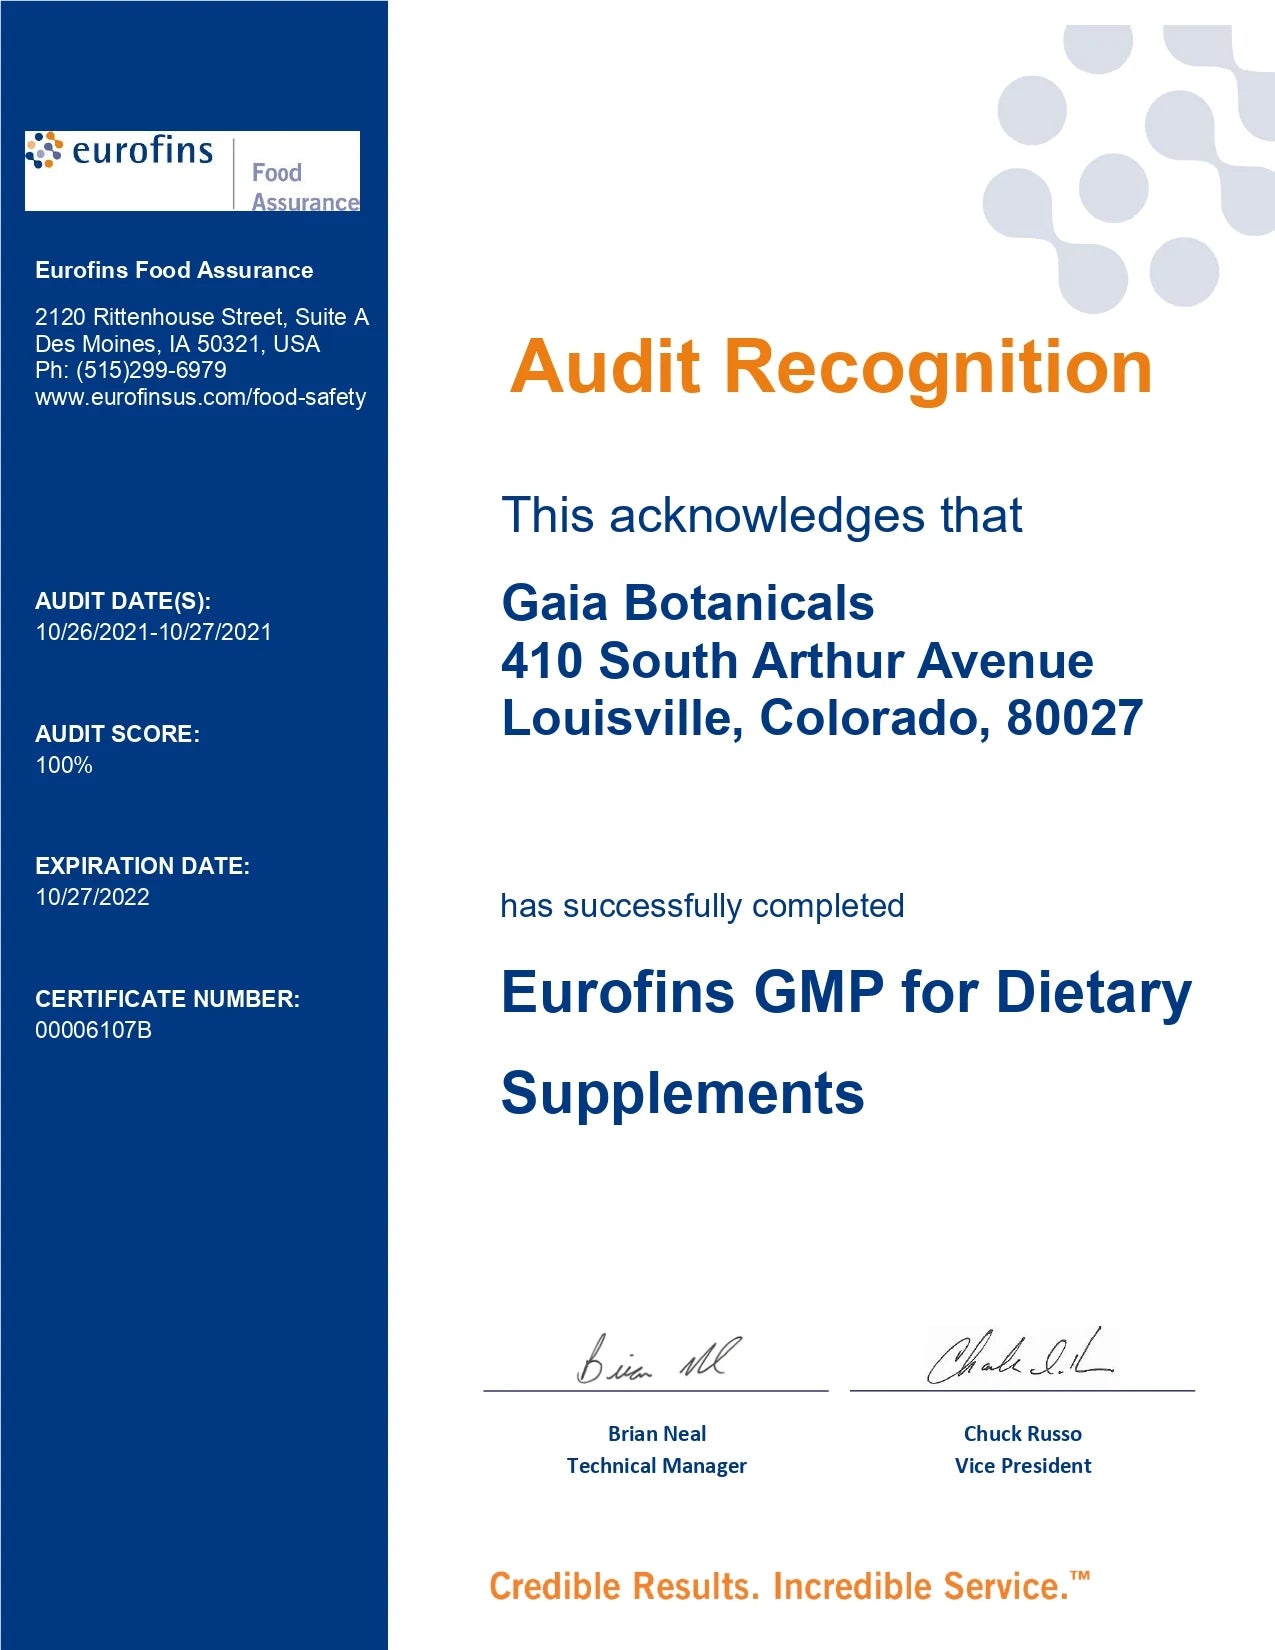 GMP Audit Recognition image